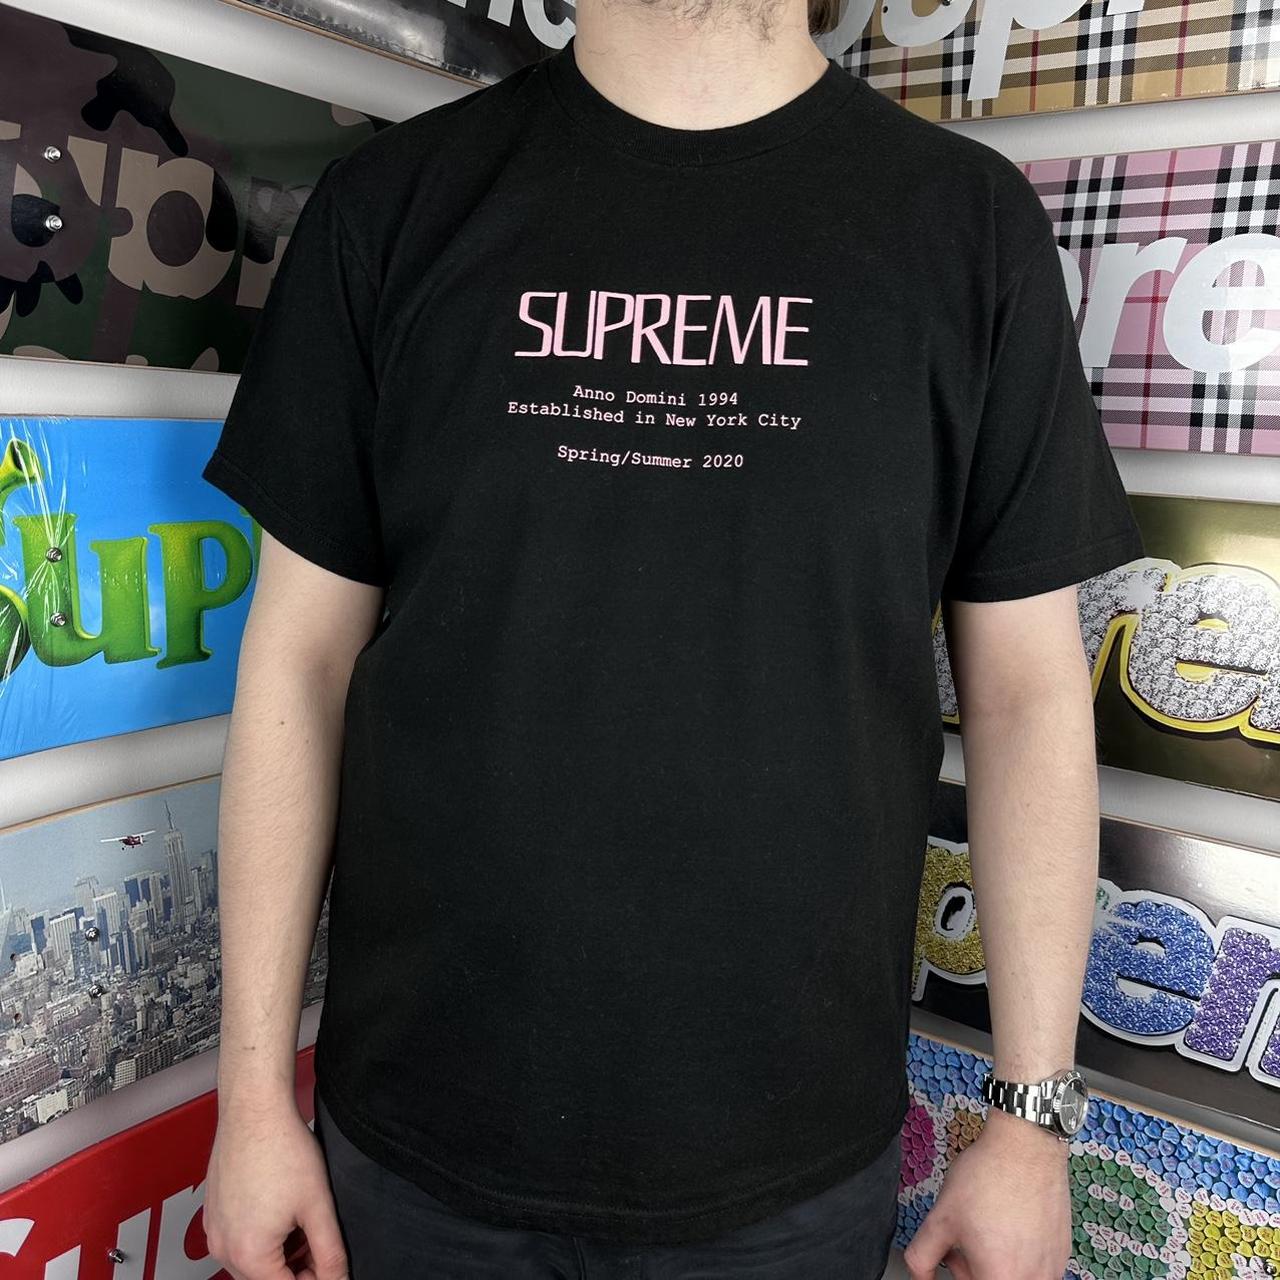 Supreme Spring/Summer 2020 T-Shirts and Tees